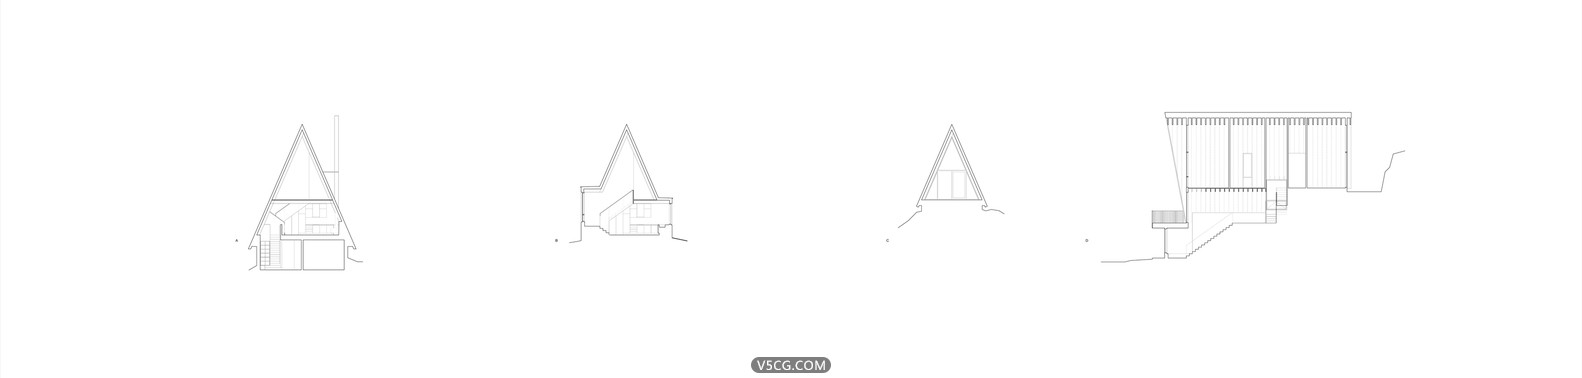 Scott-and-Scott-Architects--Whistler-Cabin-Sections.jpg